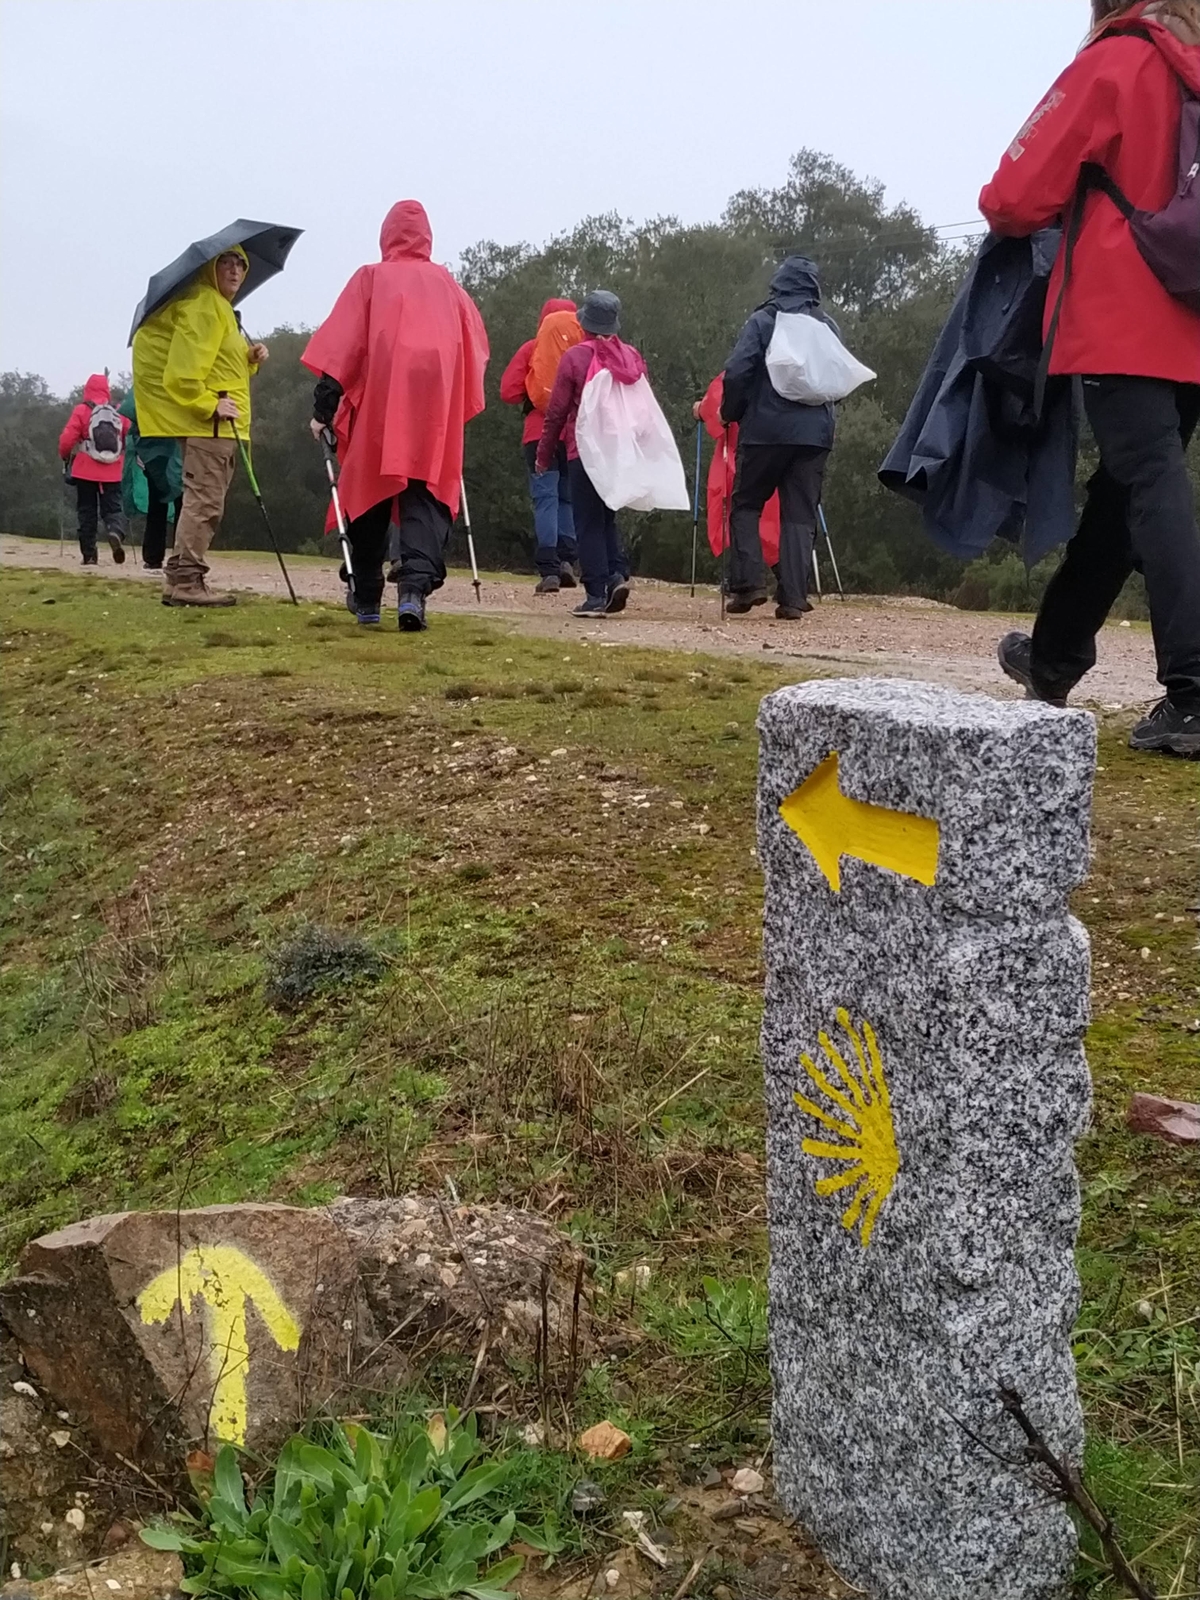 Asociación de Amigos del Camino Mozárabe de Santiago en Córdoba - Etapa 5: Cerro Muriano - Villaharta